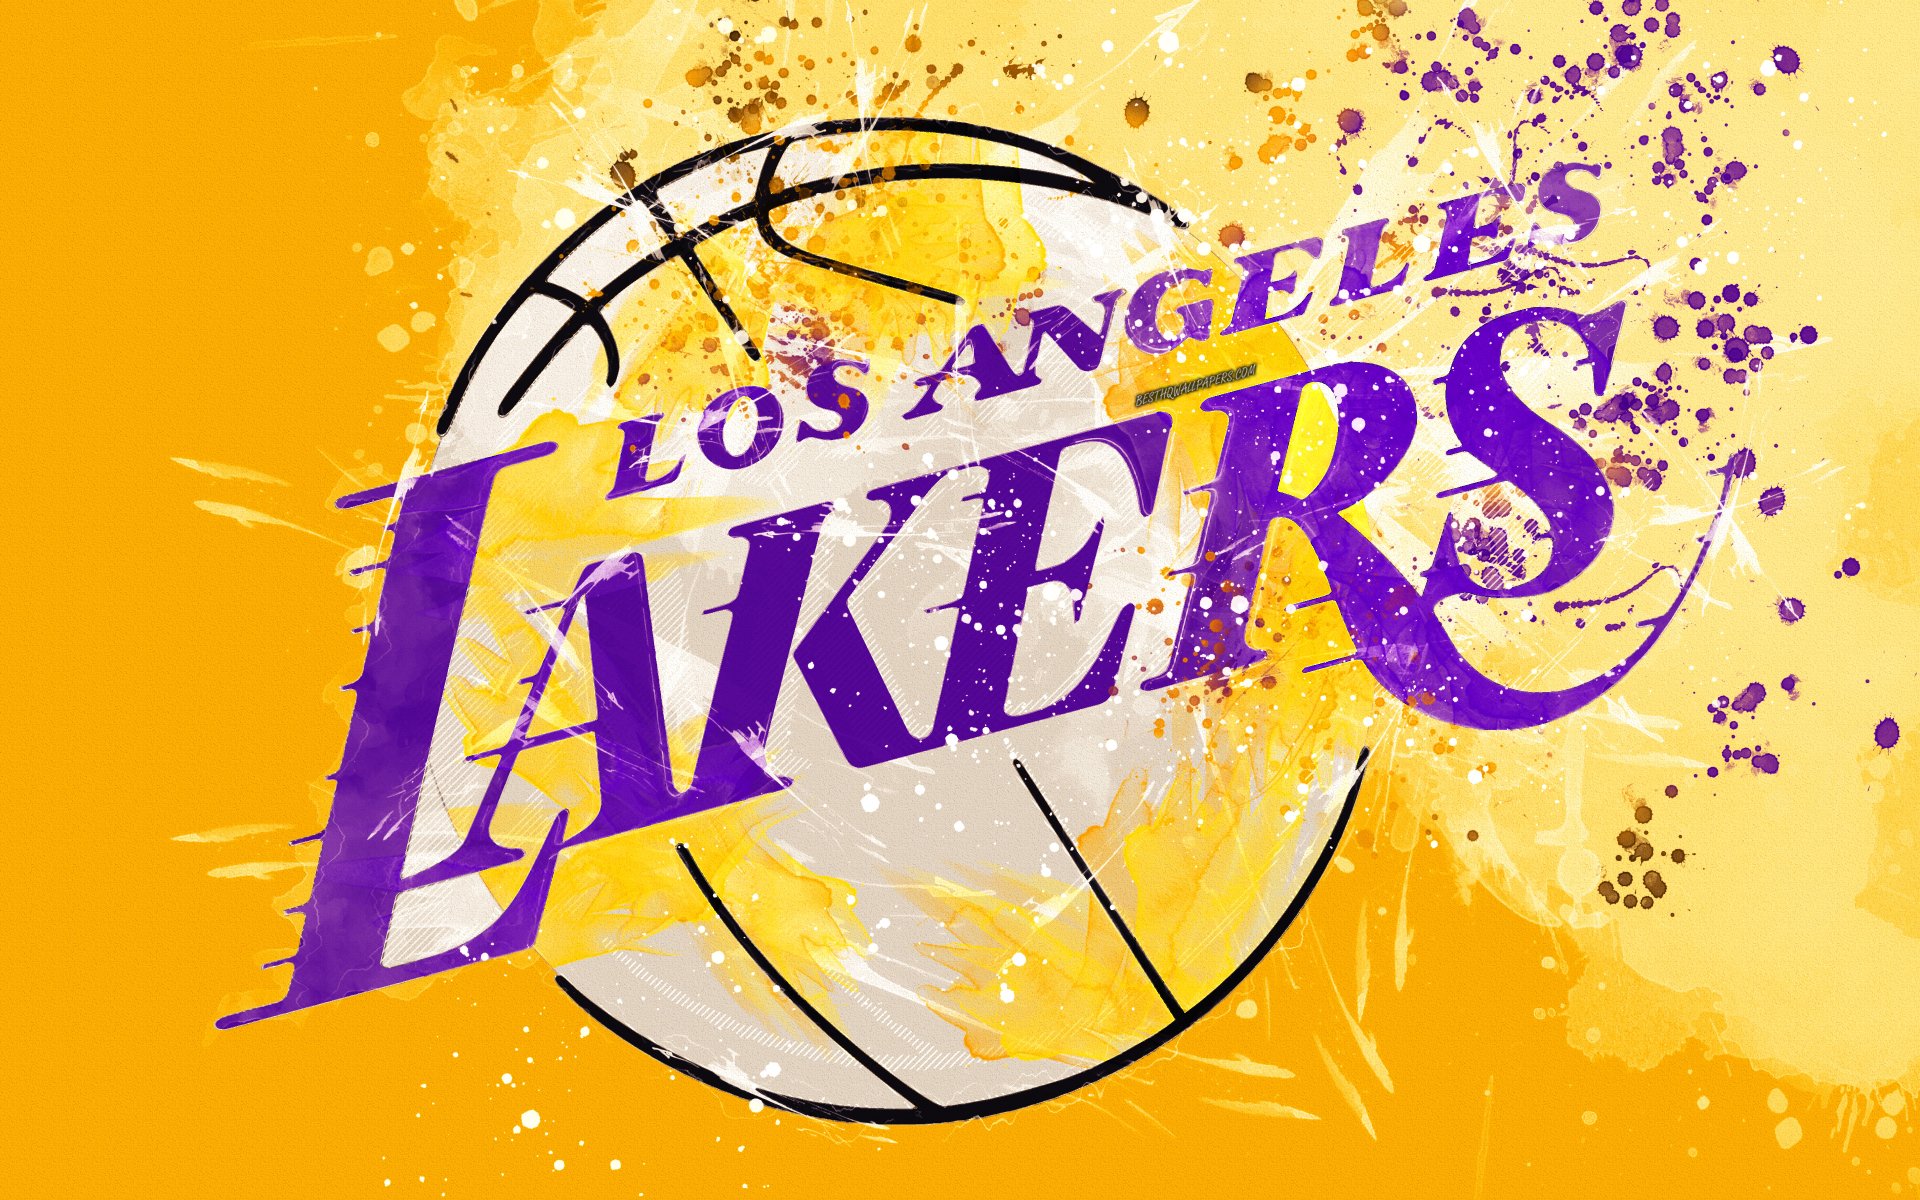 La lakers. Лос Анджелес Лейкерс эмблема. Лейкерс Лос Анджелес арт. Баскетбольный клуб Лос-Анджелес Лейкерс лого. Лос-Анджелес Лейкерс обои.